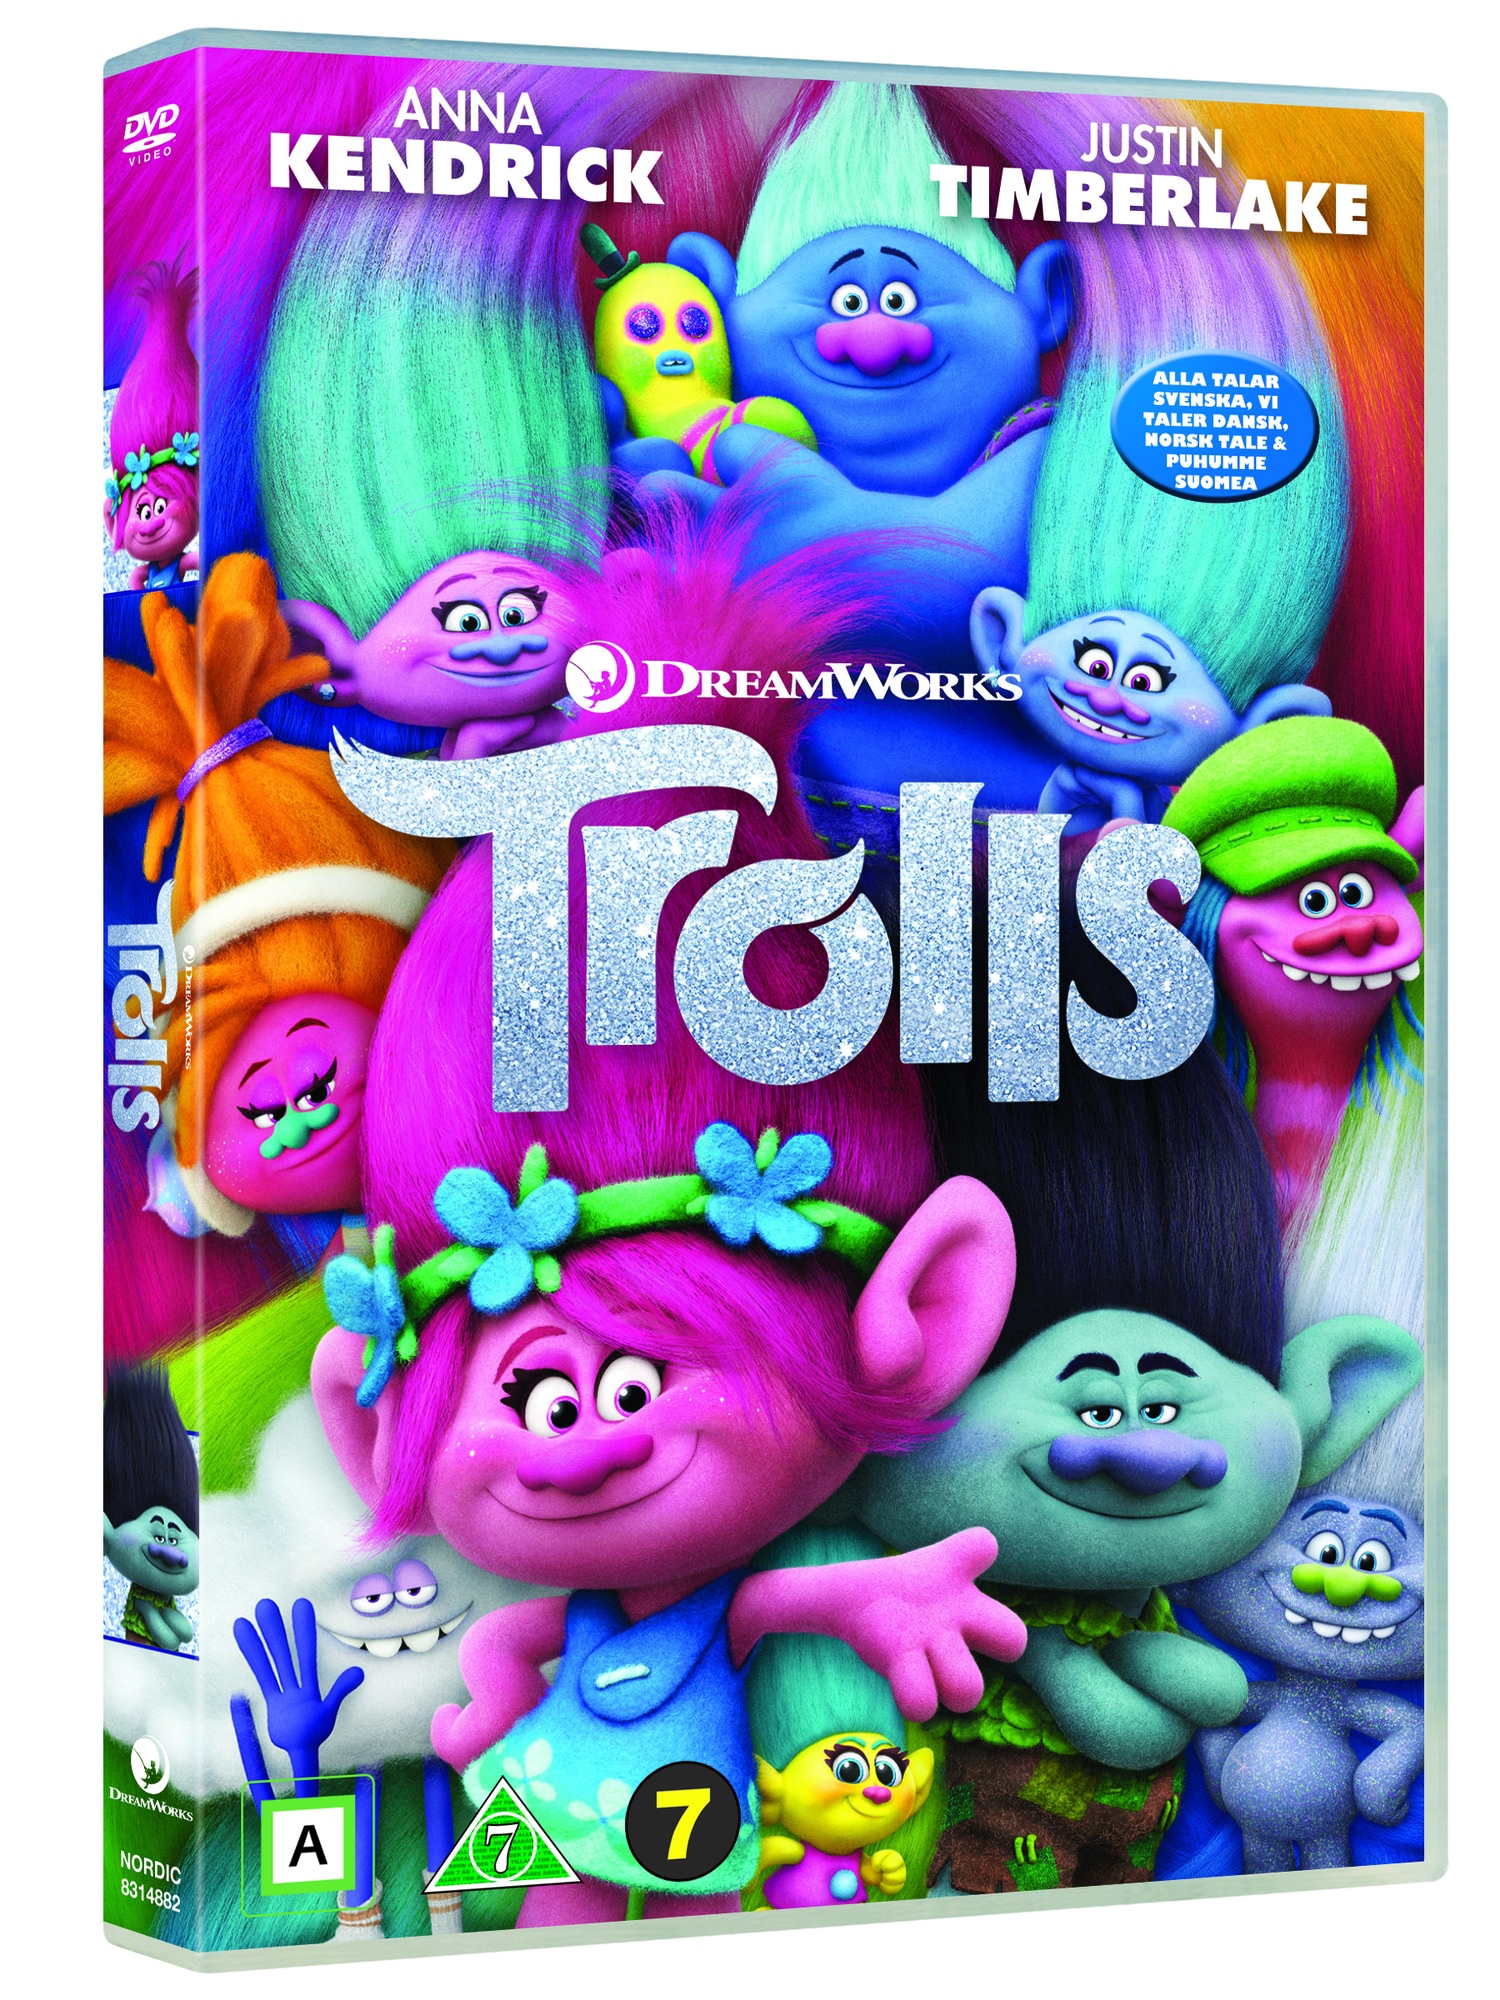 Trolls (dvd) - Elkjøp